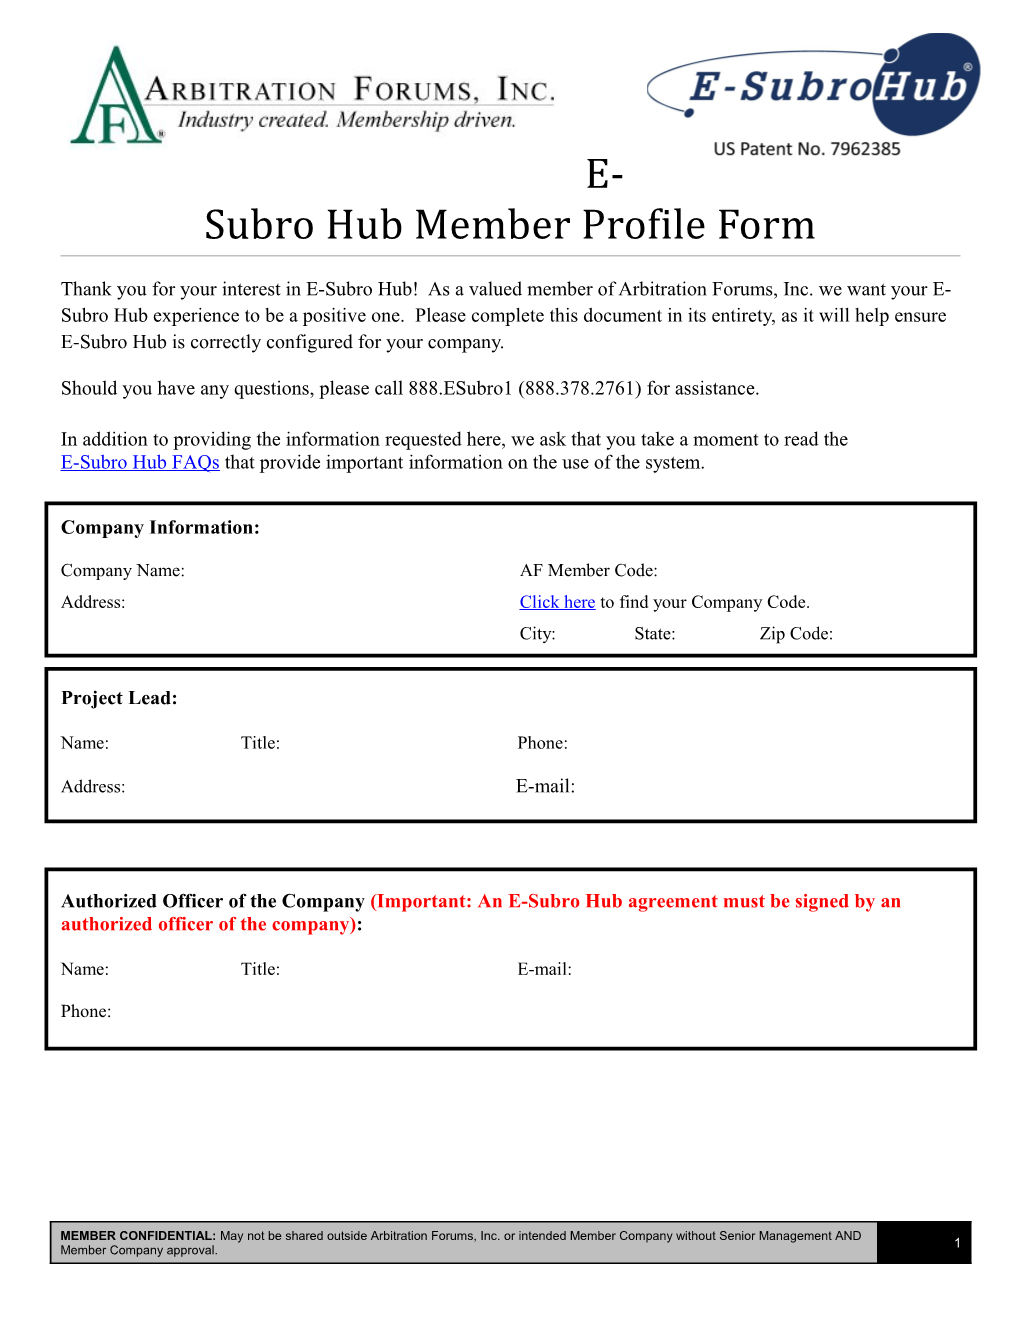 E-Subro Hub Member Profile Form